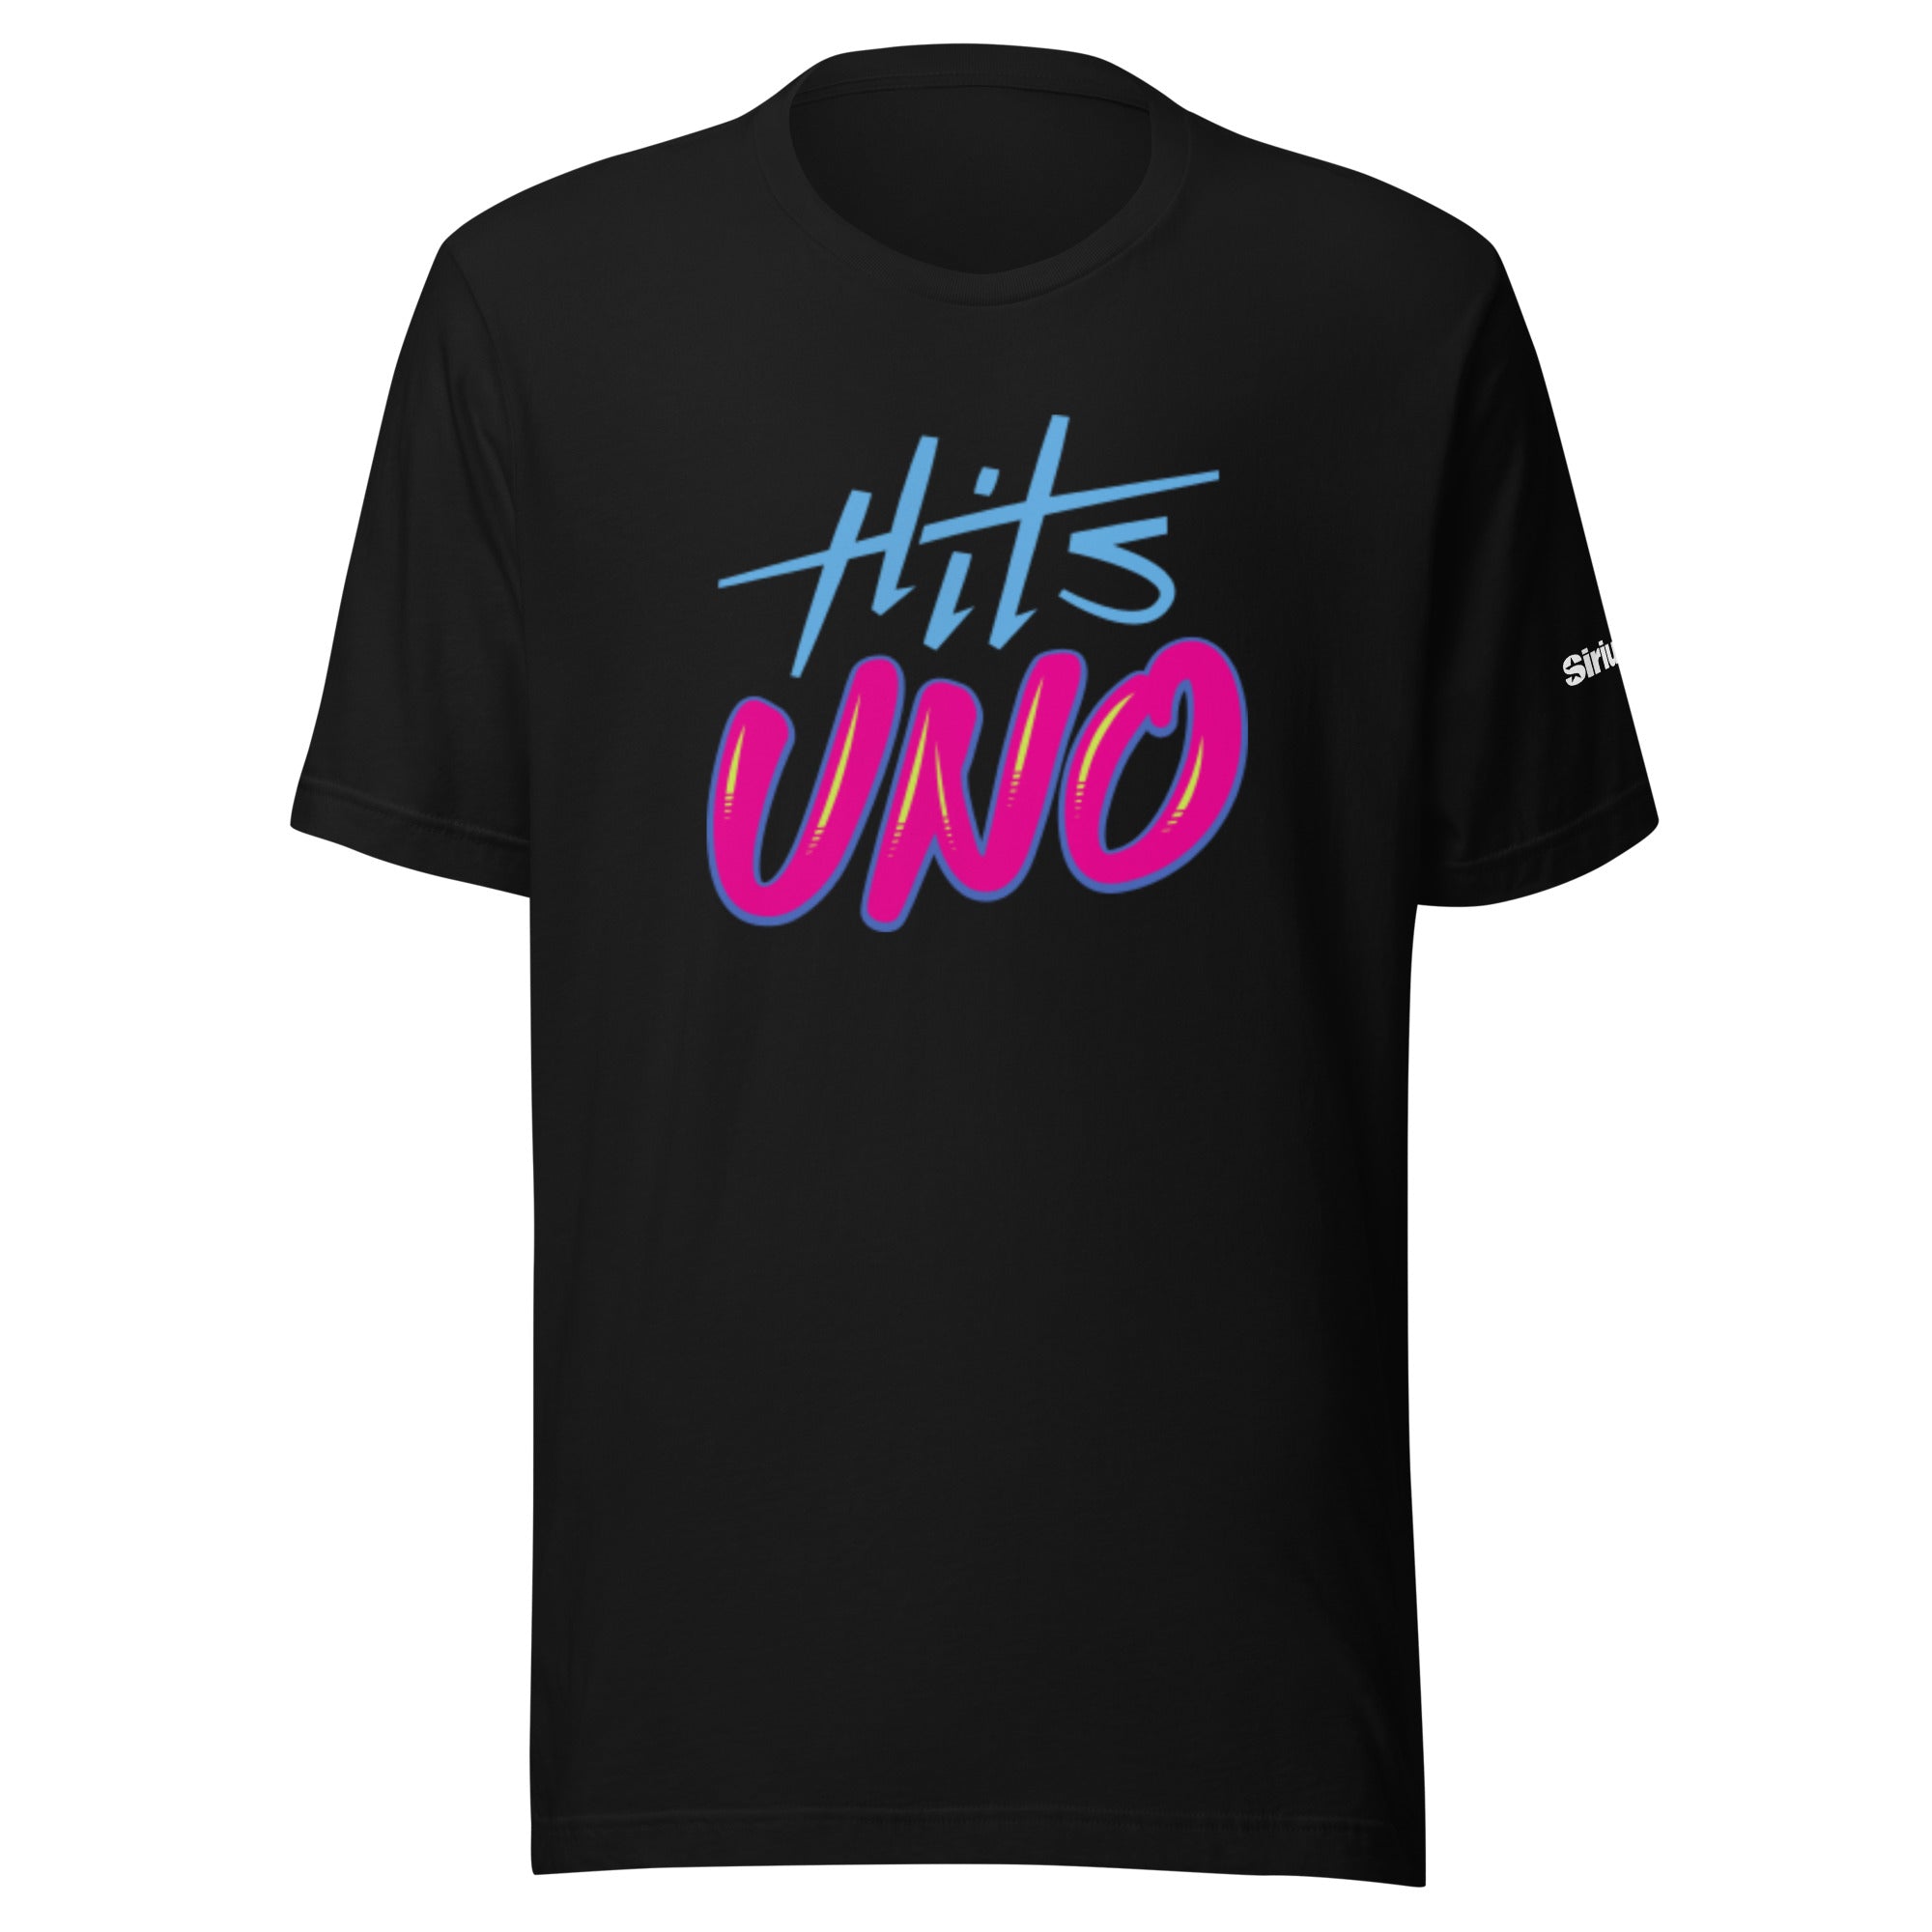 Hits Uno: Black T-shirt